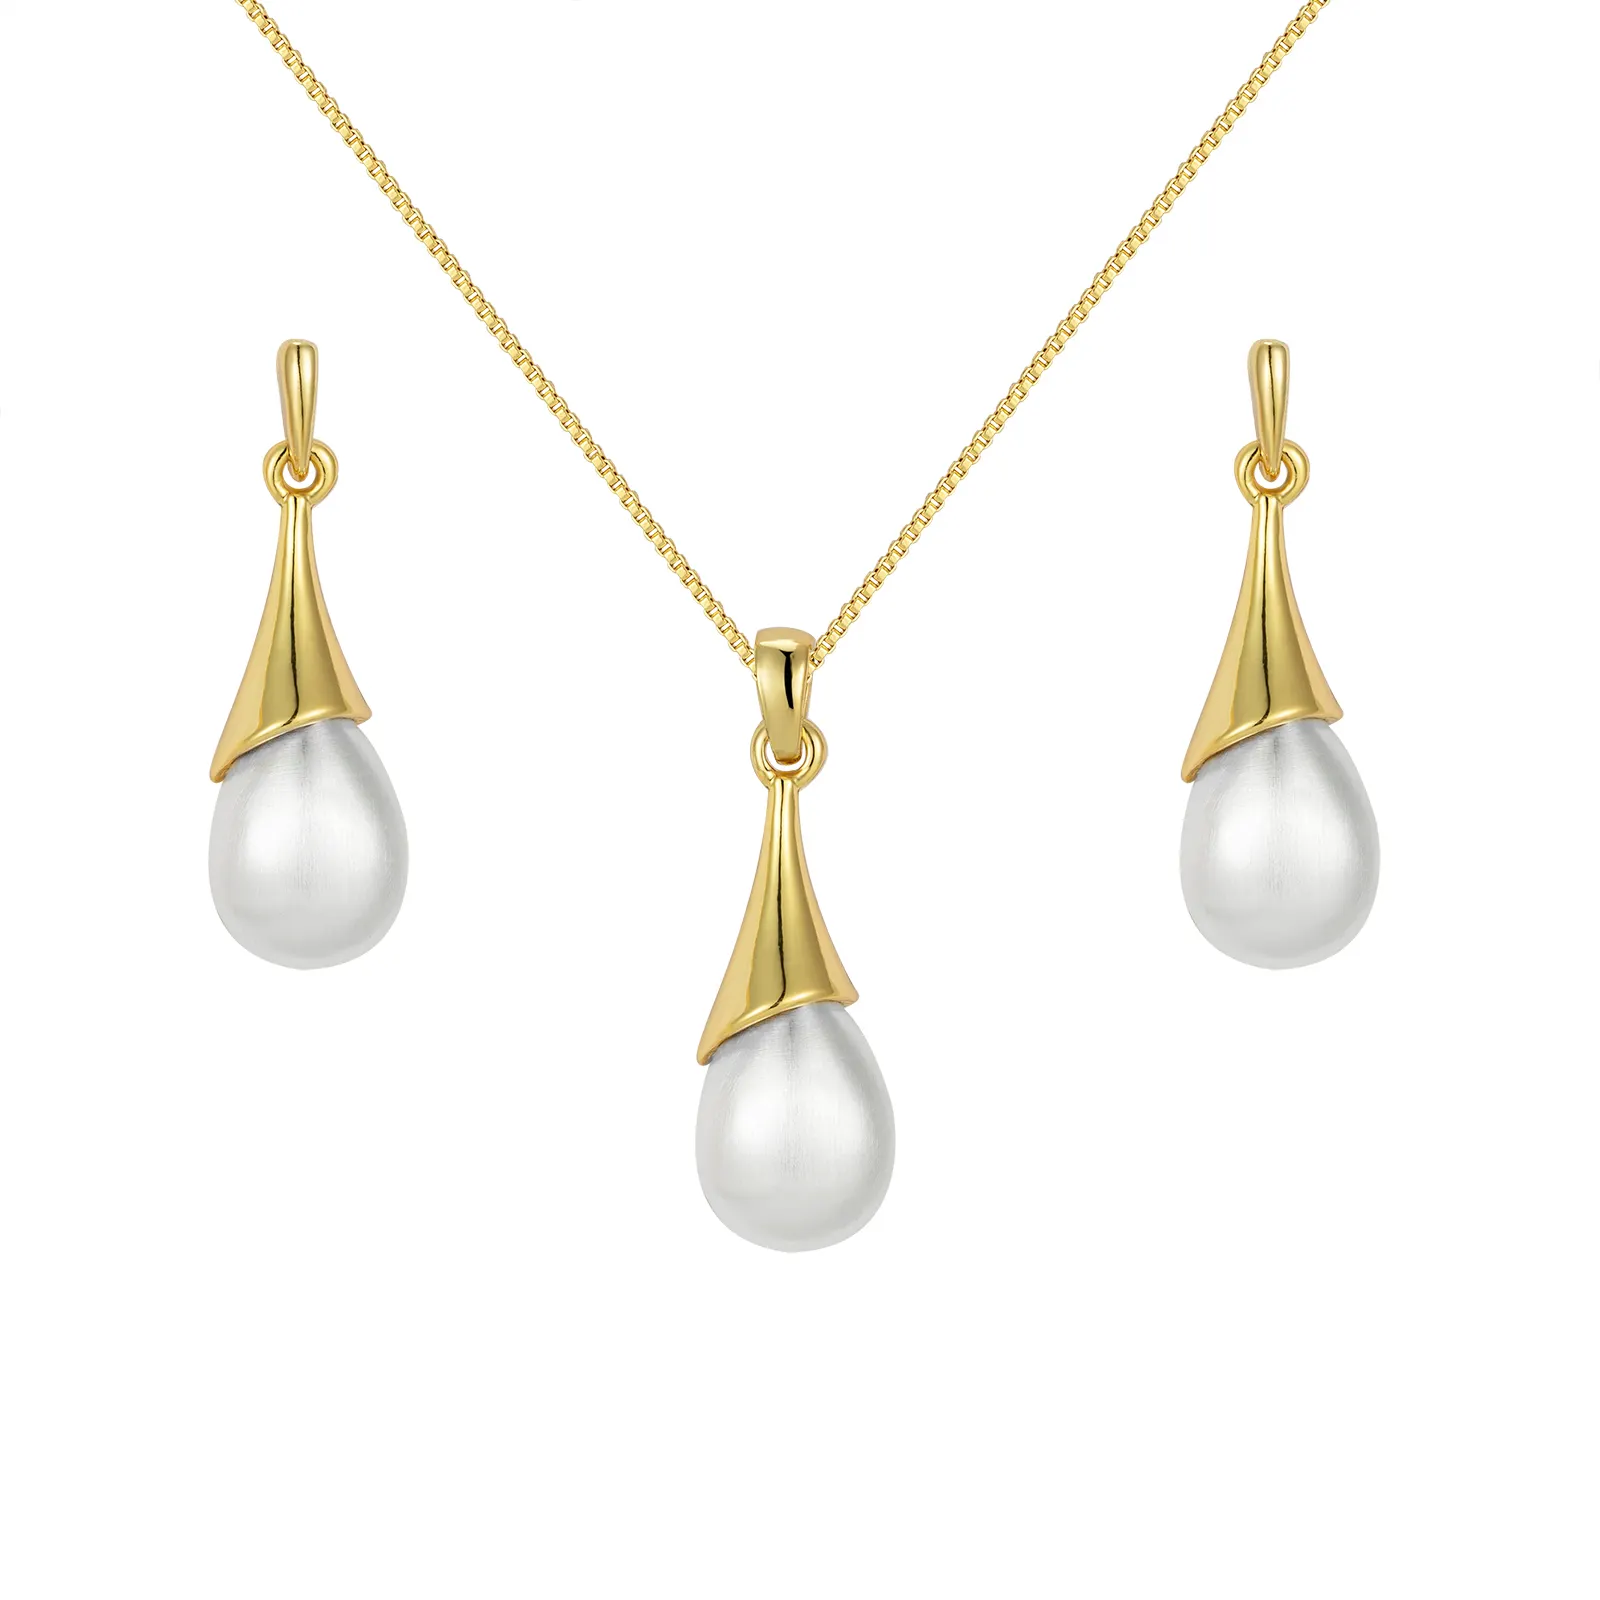 fashion jewelry 14k gold color dubai Mother's day elegantgift earring and pendant dubai jewelry sets jewellery